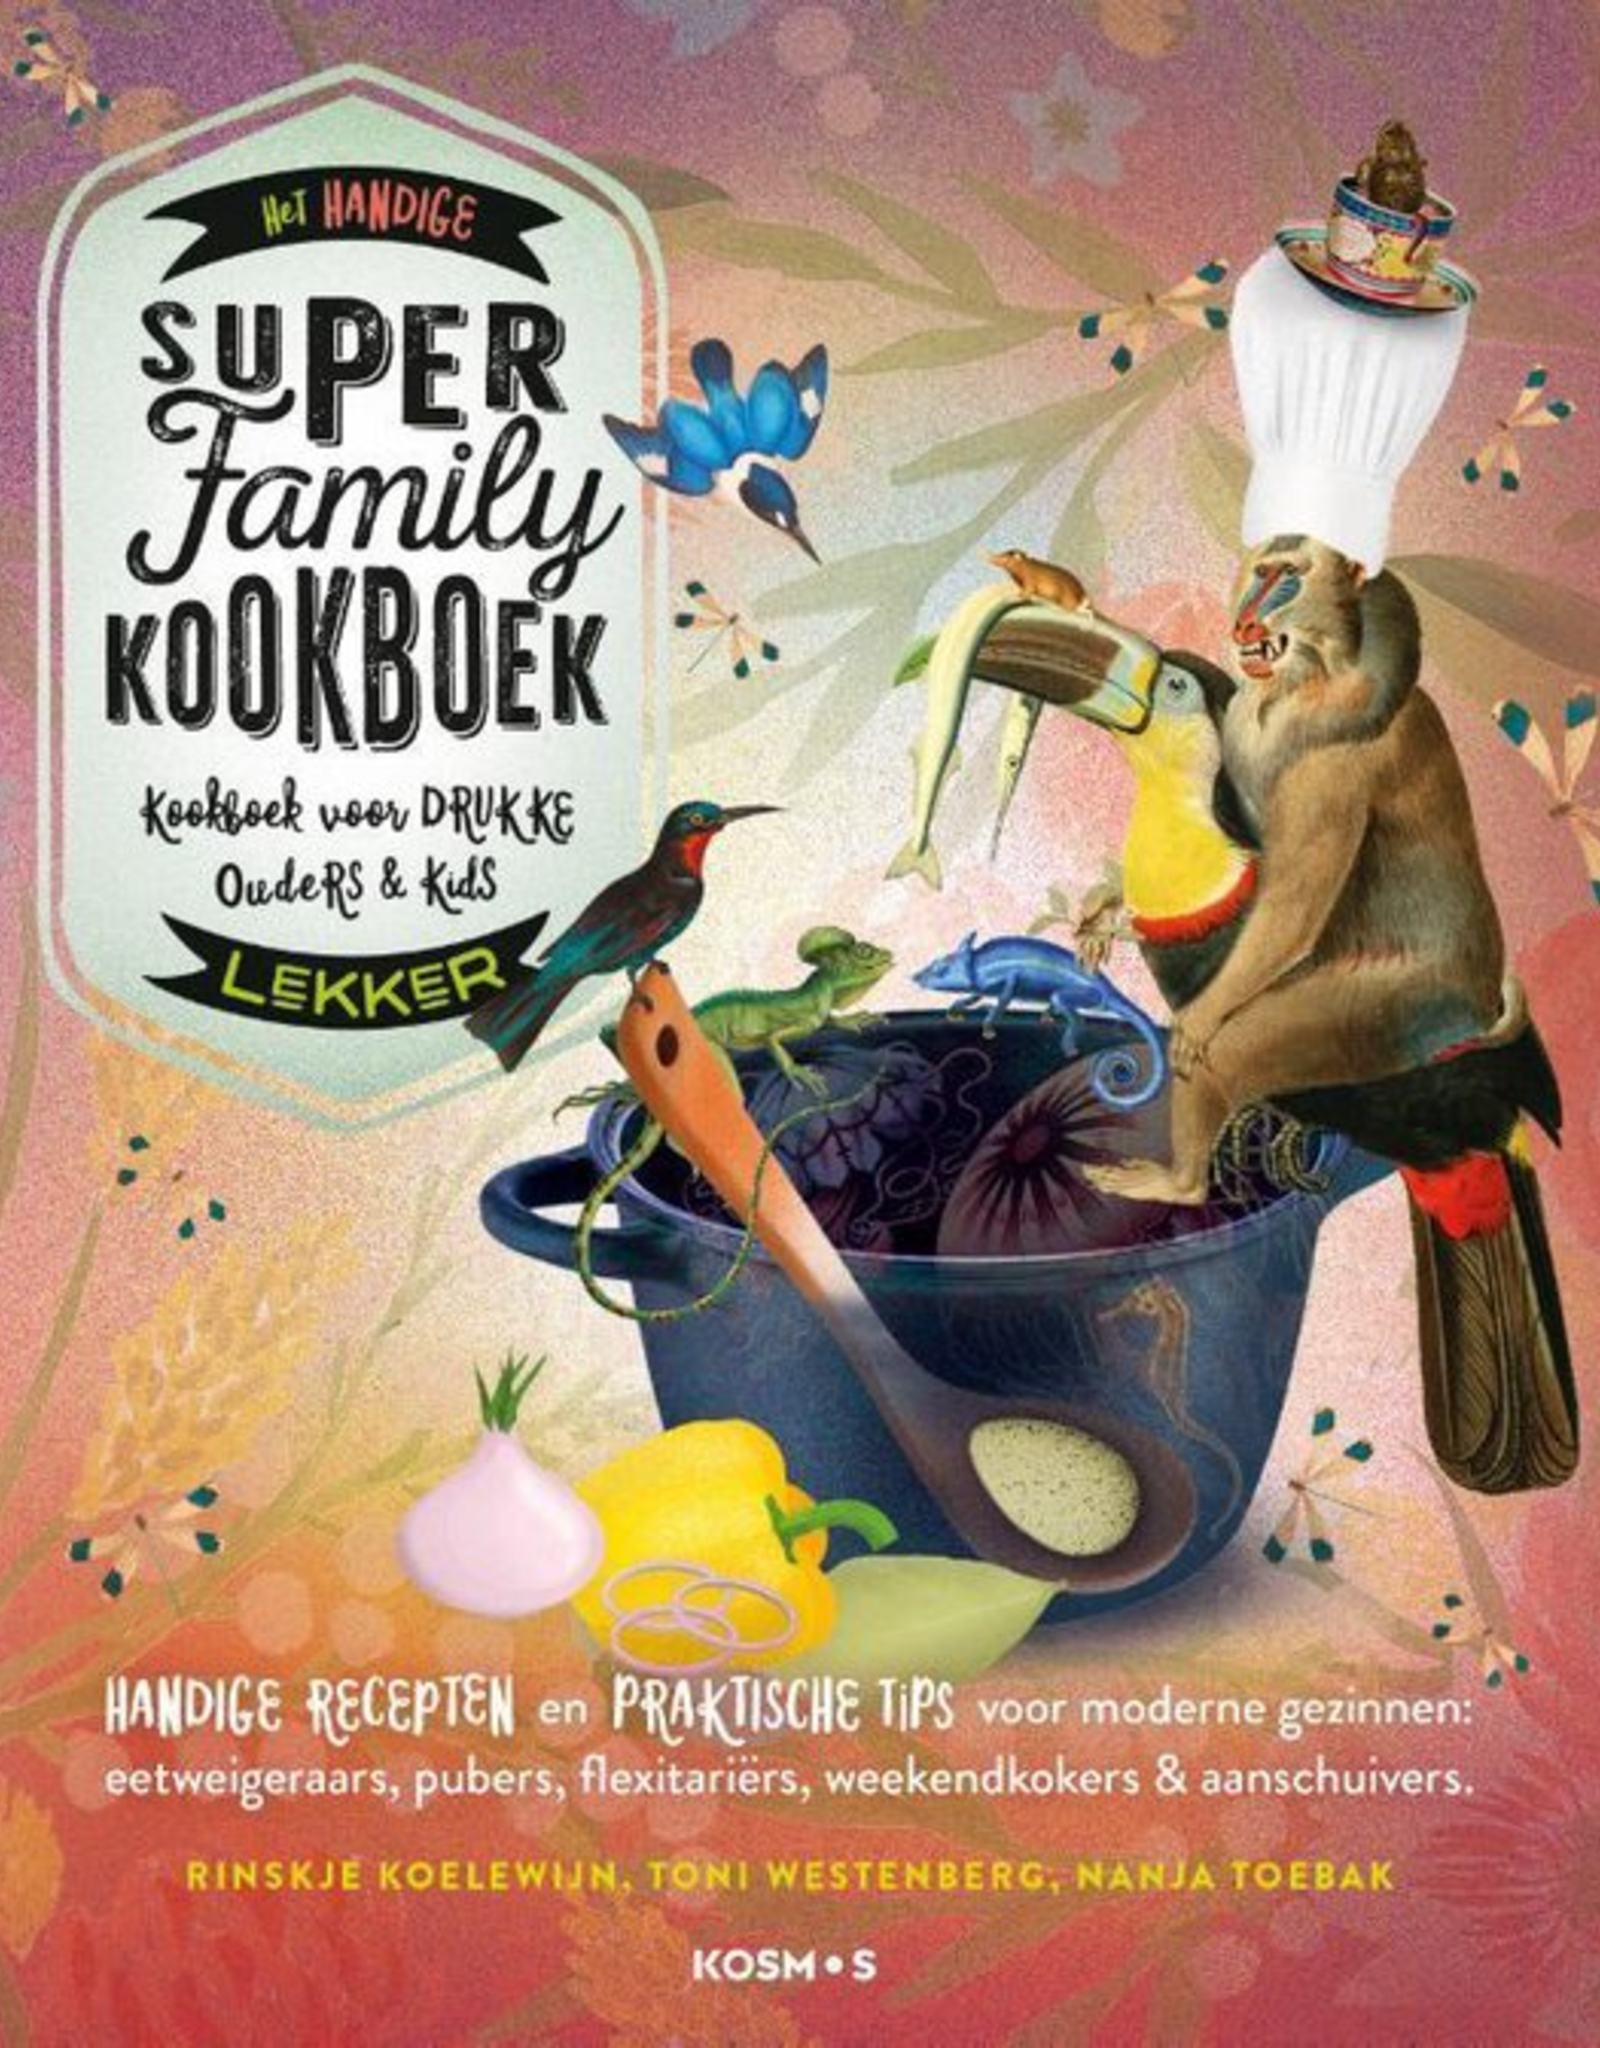 Het handige Super Family Kookboek  - Kookboek voor drukke Ouders en Kids